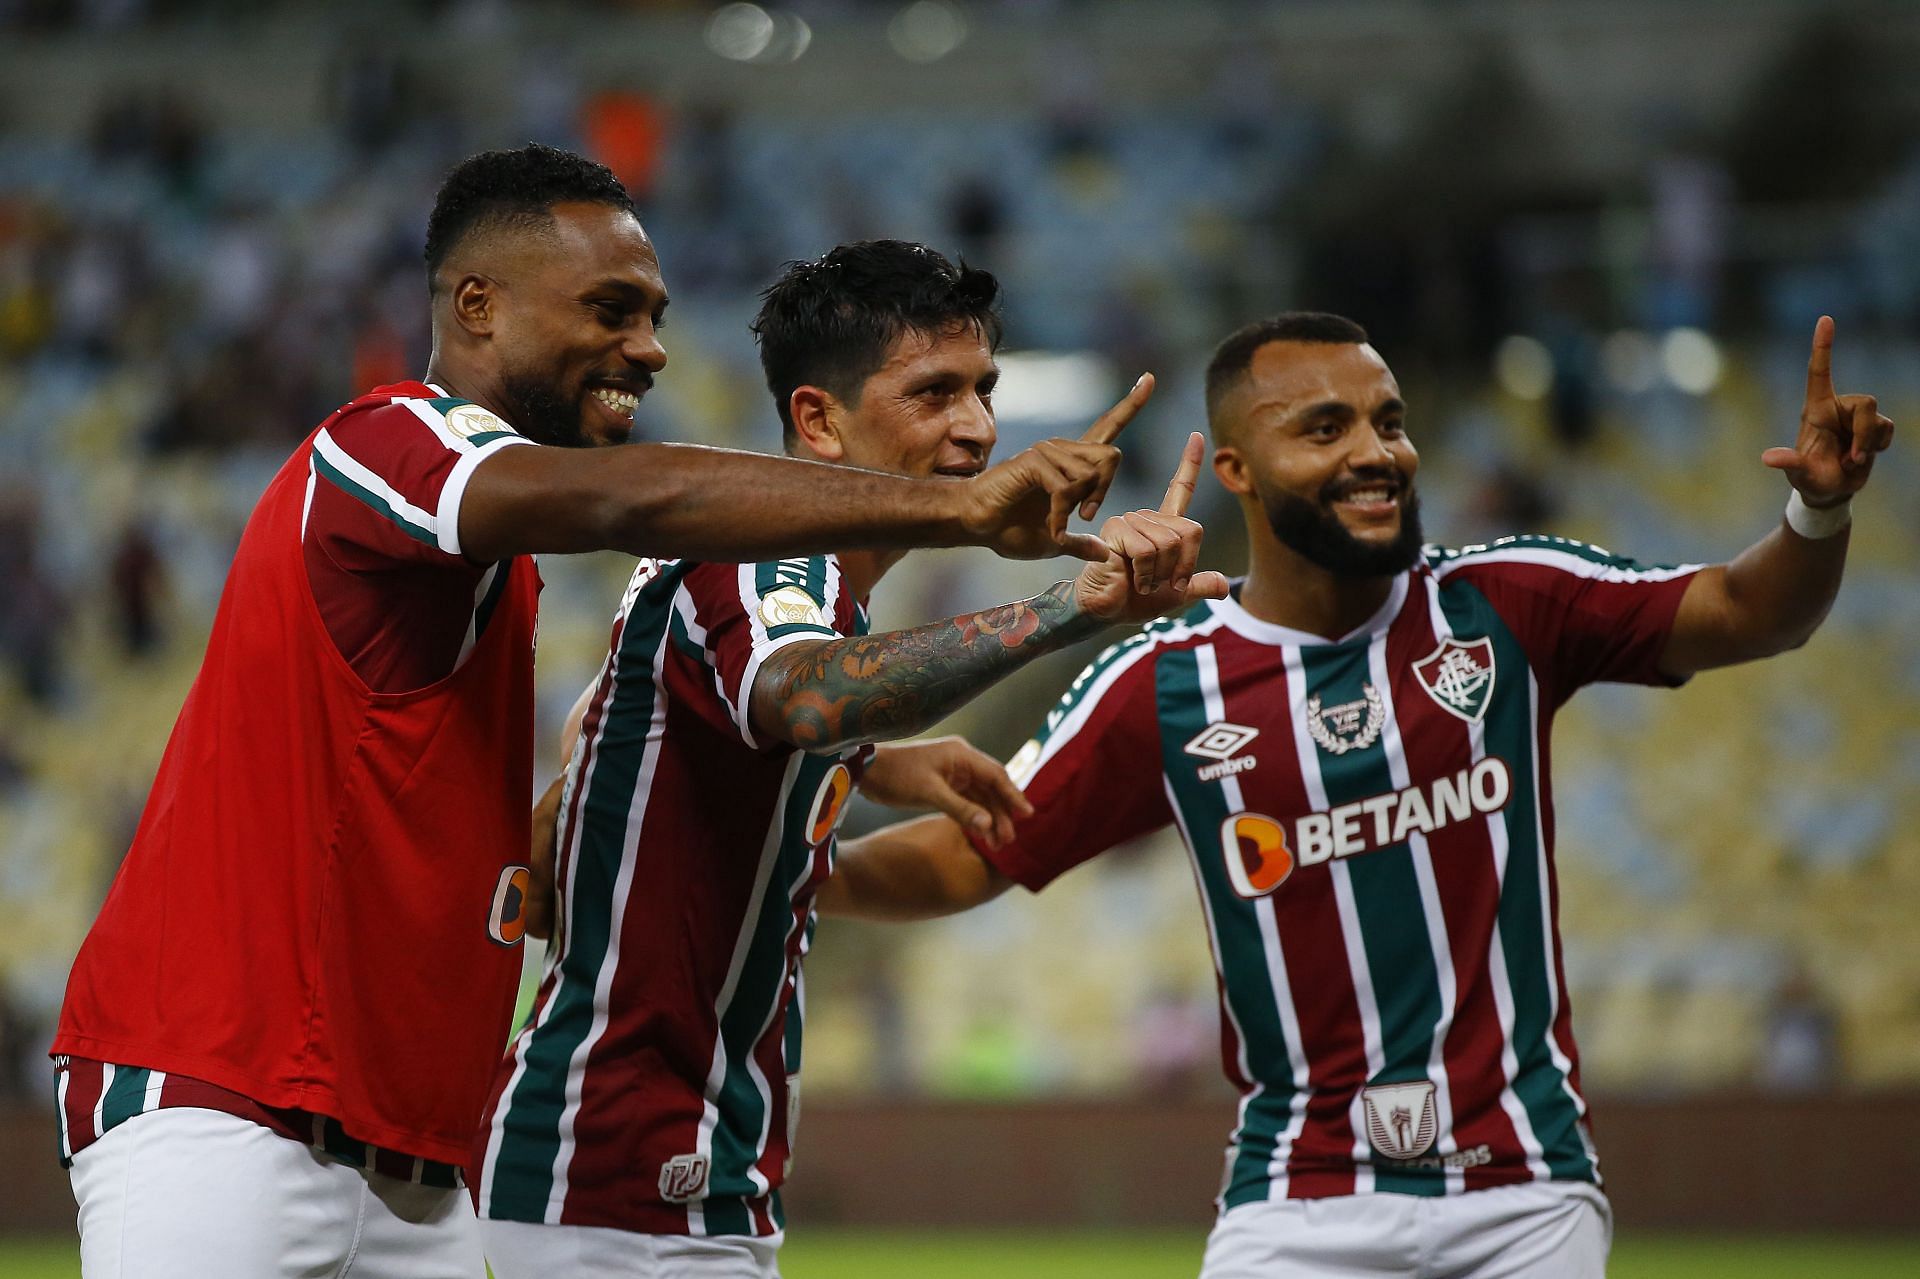 Fluminense will face Corinthians in a crucial Brazilian Serie A fixture on Saturday